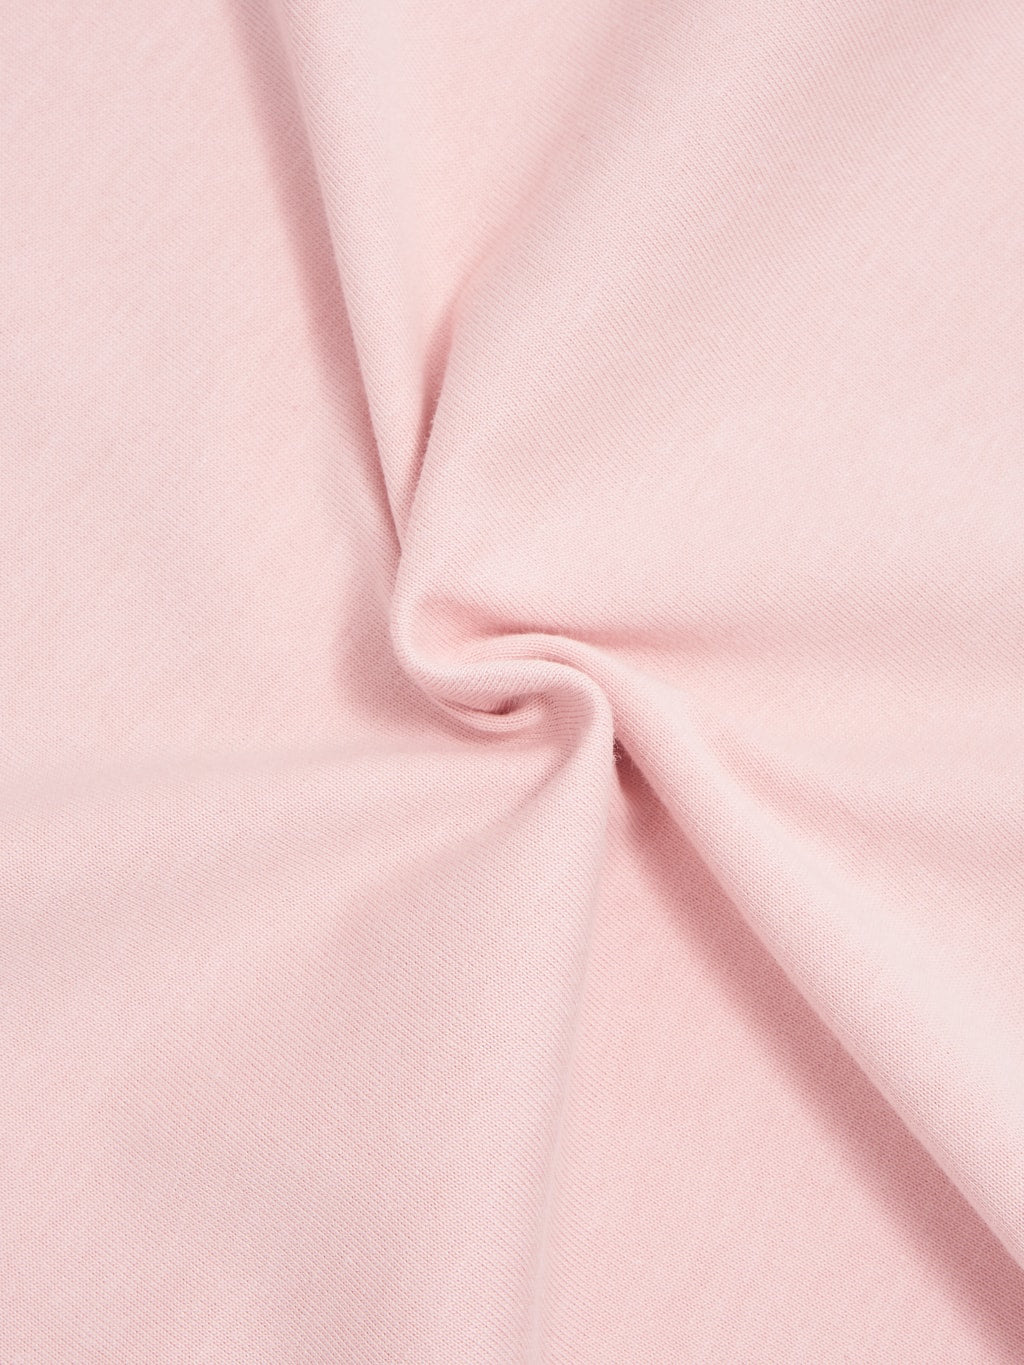 jackman grace tshirt baby pink  texture